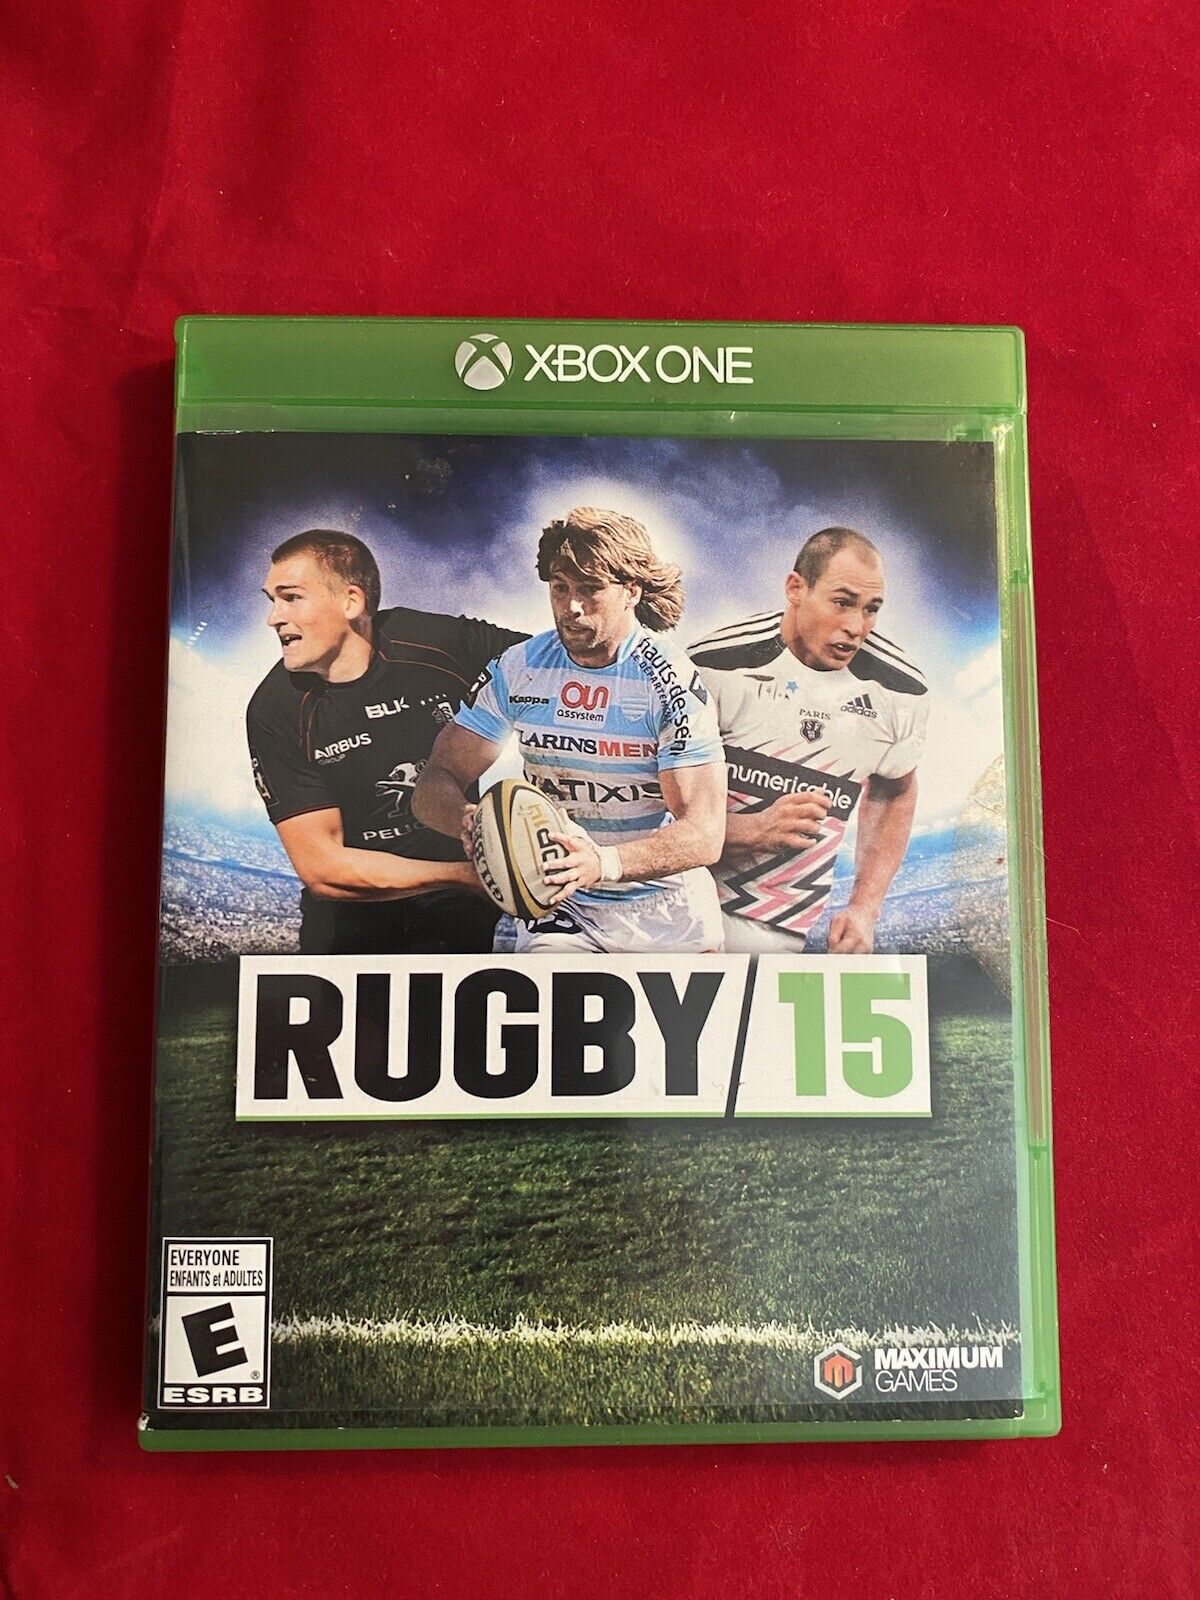 Alert bodem Patch Rugby 15 (Microsoft Xbox One, 2015) 814290013073 | eBay